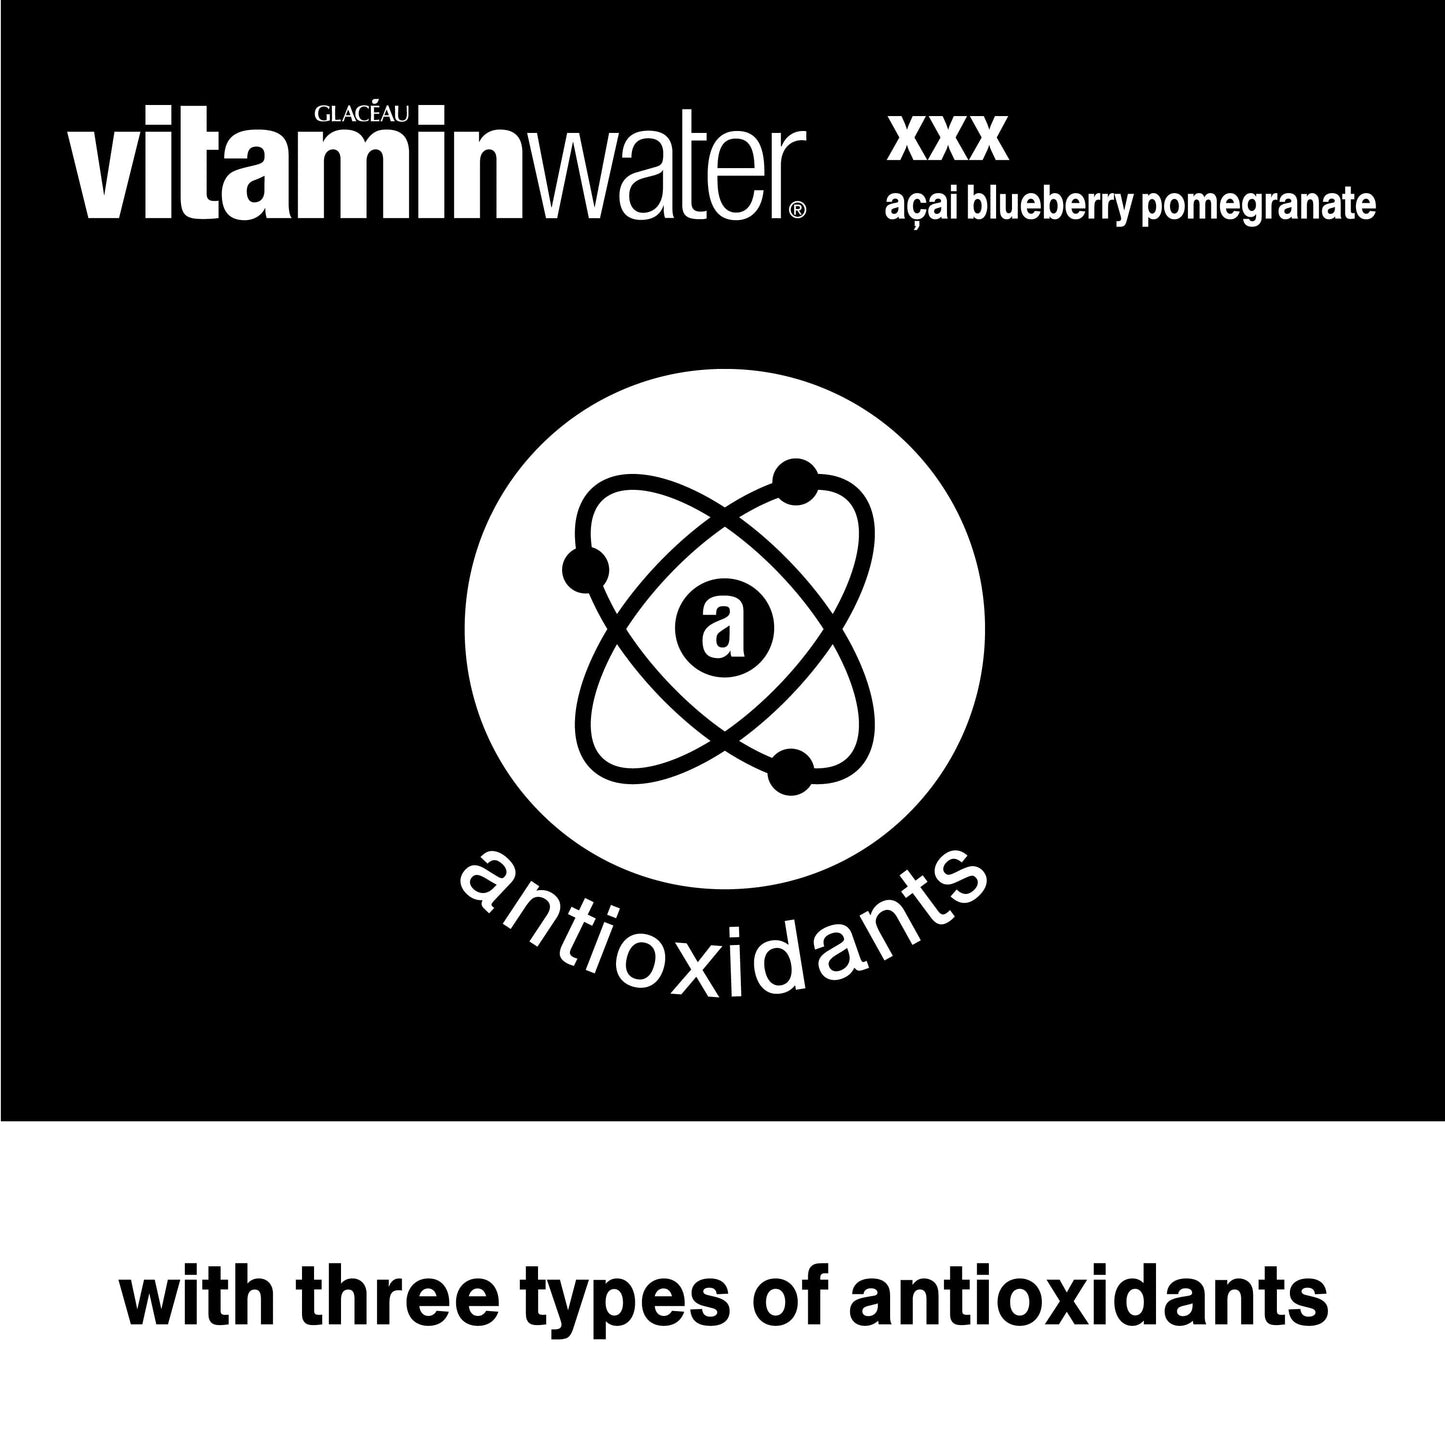 vitaminwater xxx electrolyte enhanced water, acai blueberry pomegranate, 20 fl oz bottle